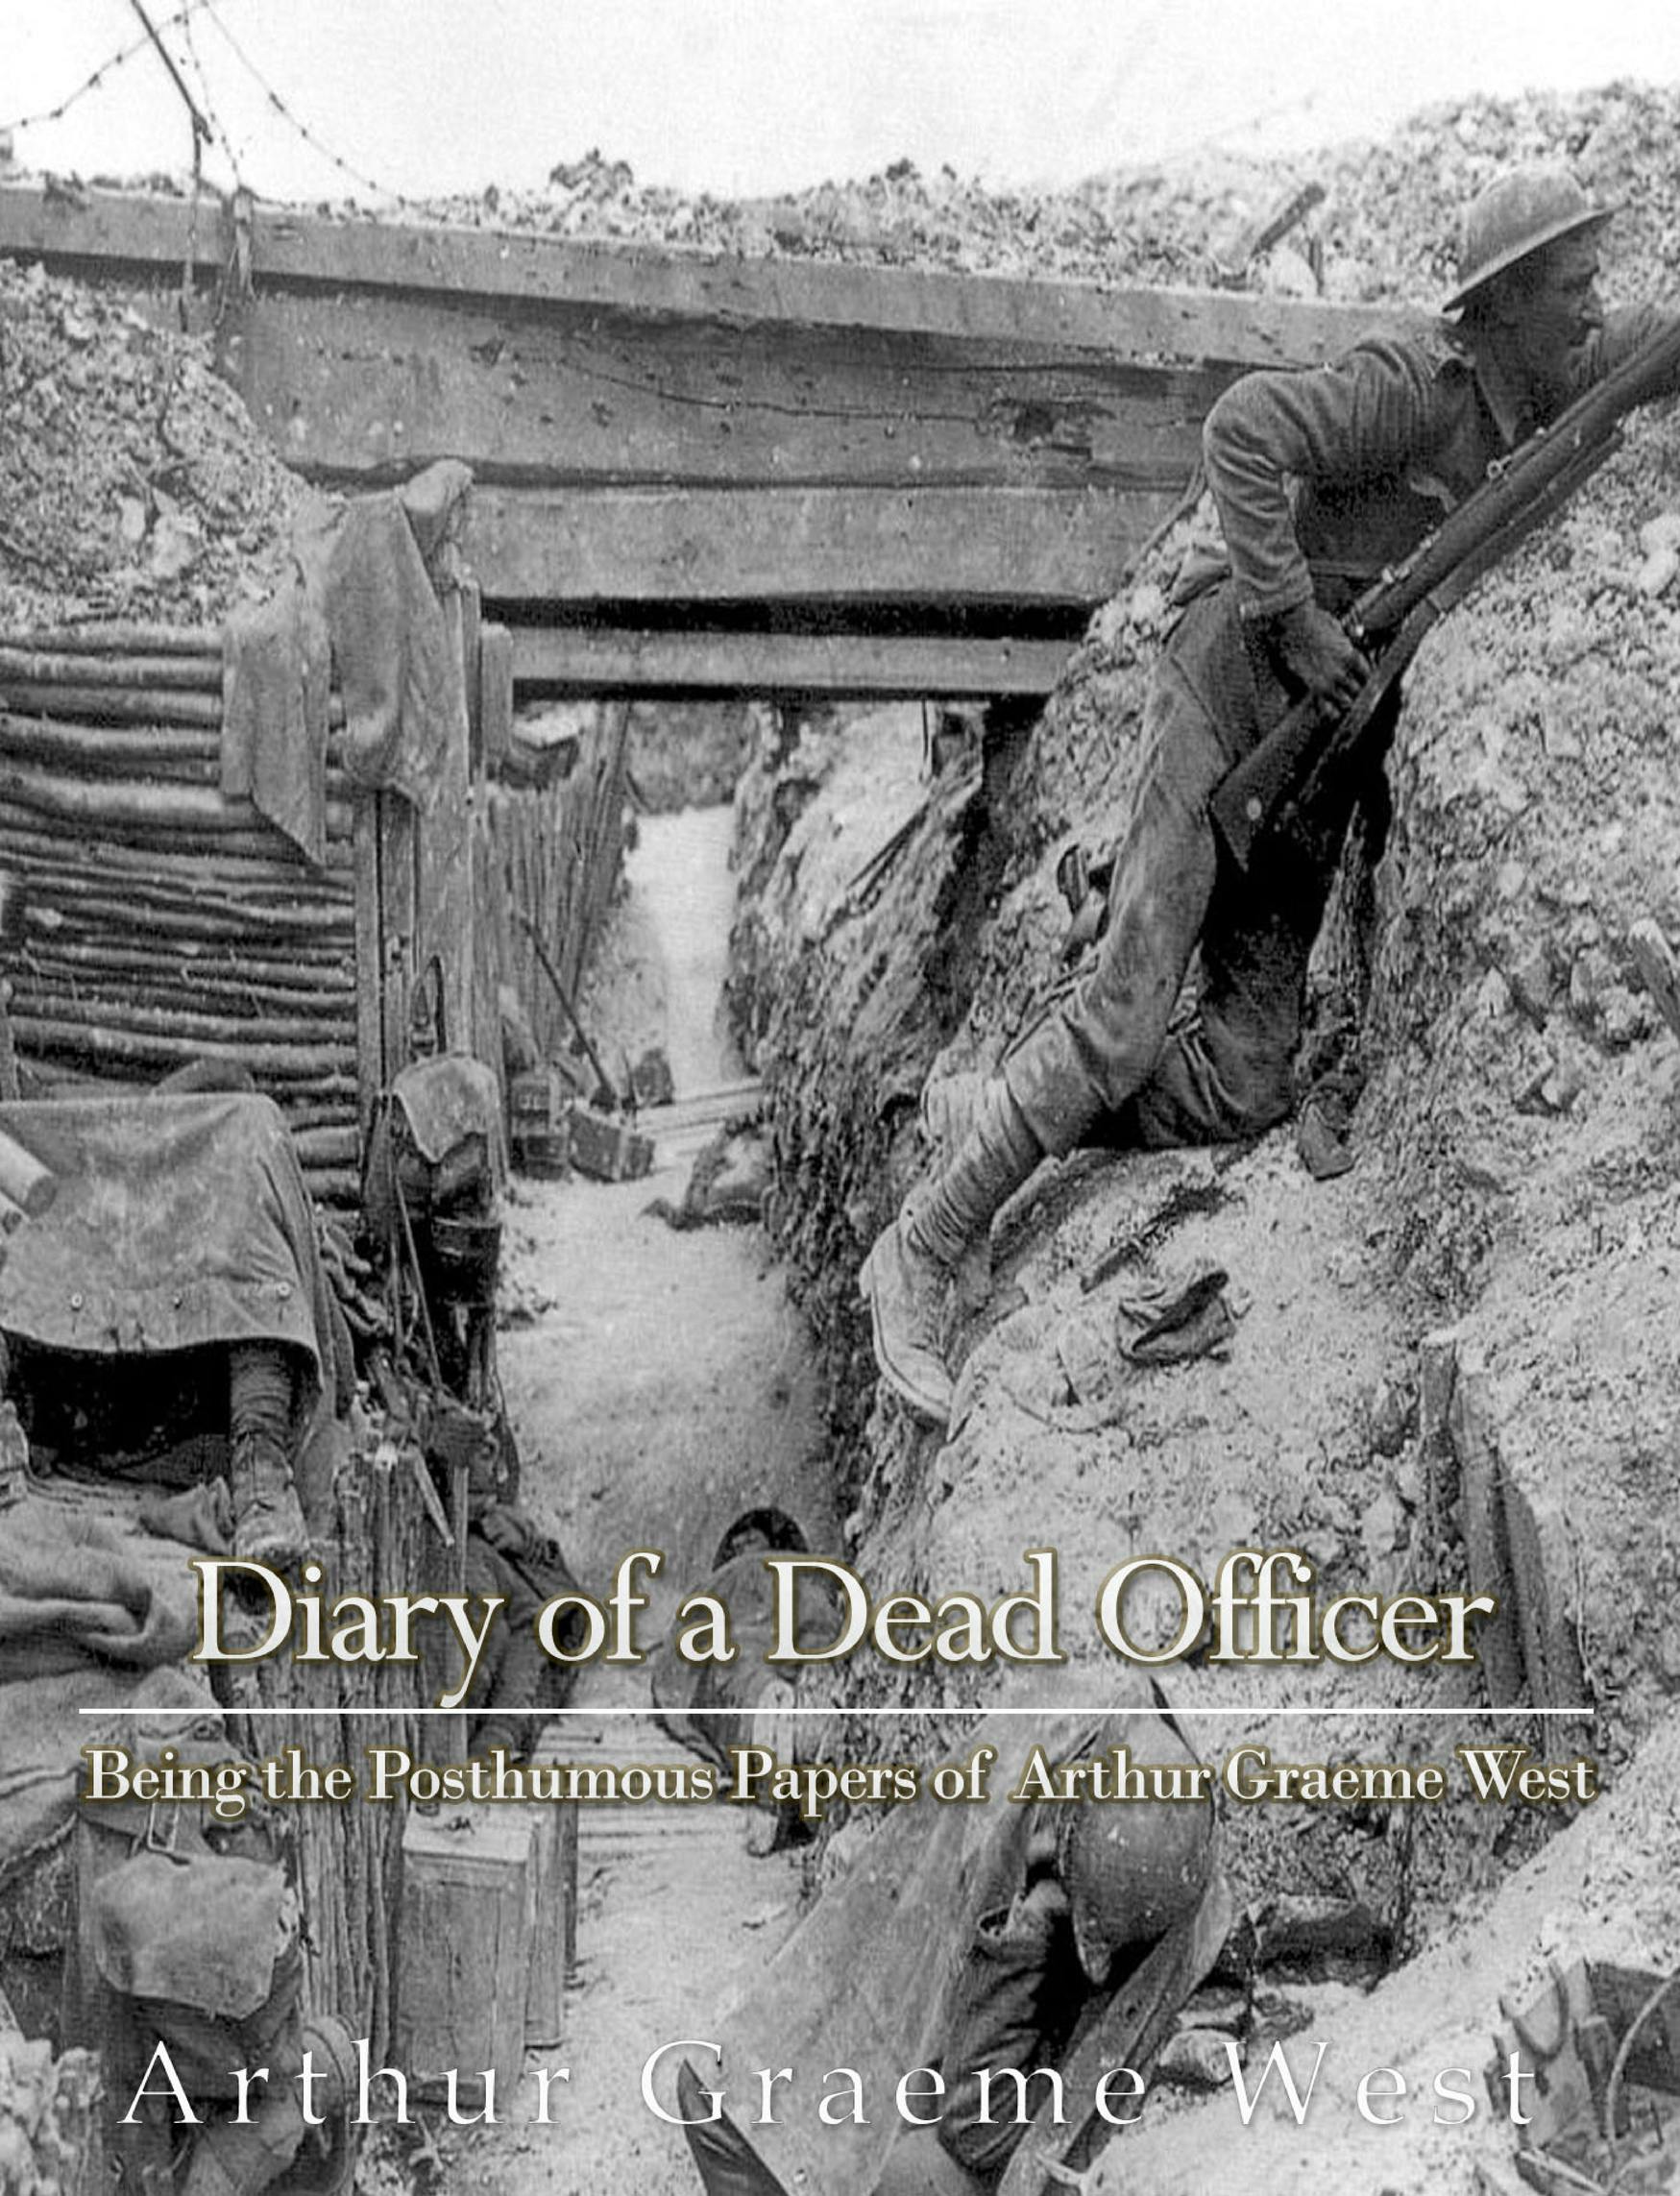 Diary of a Dead Officer - Arthur Graeme West